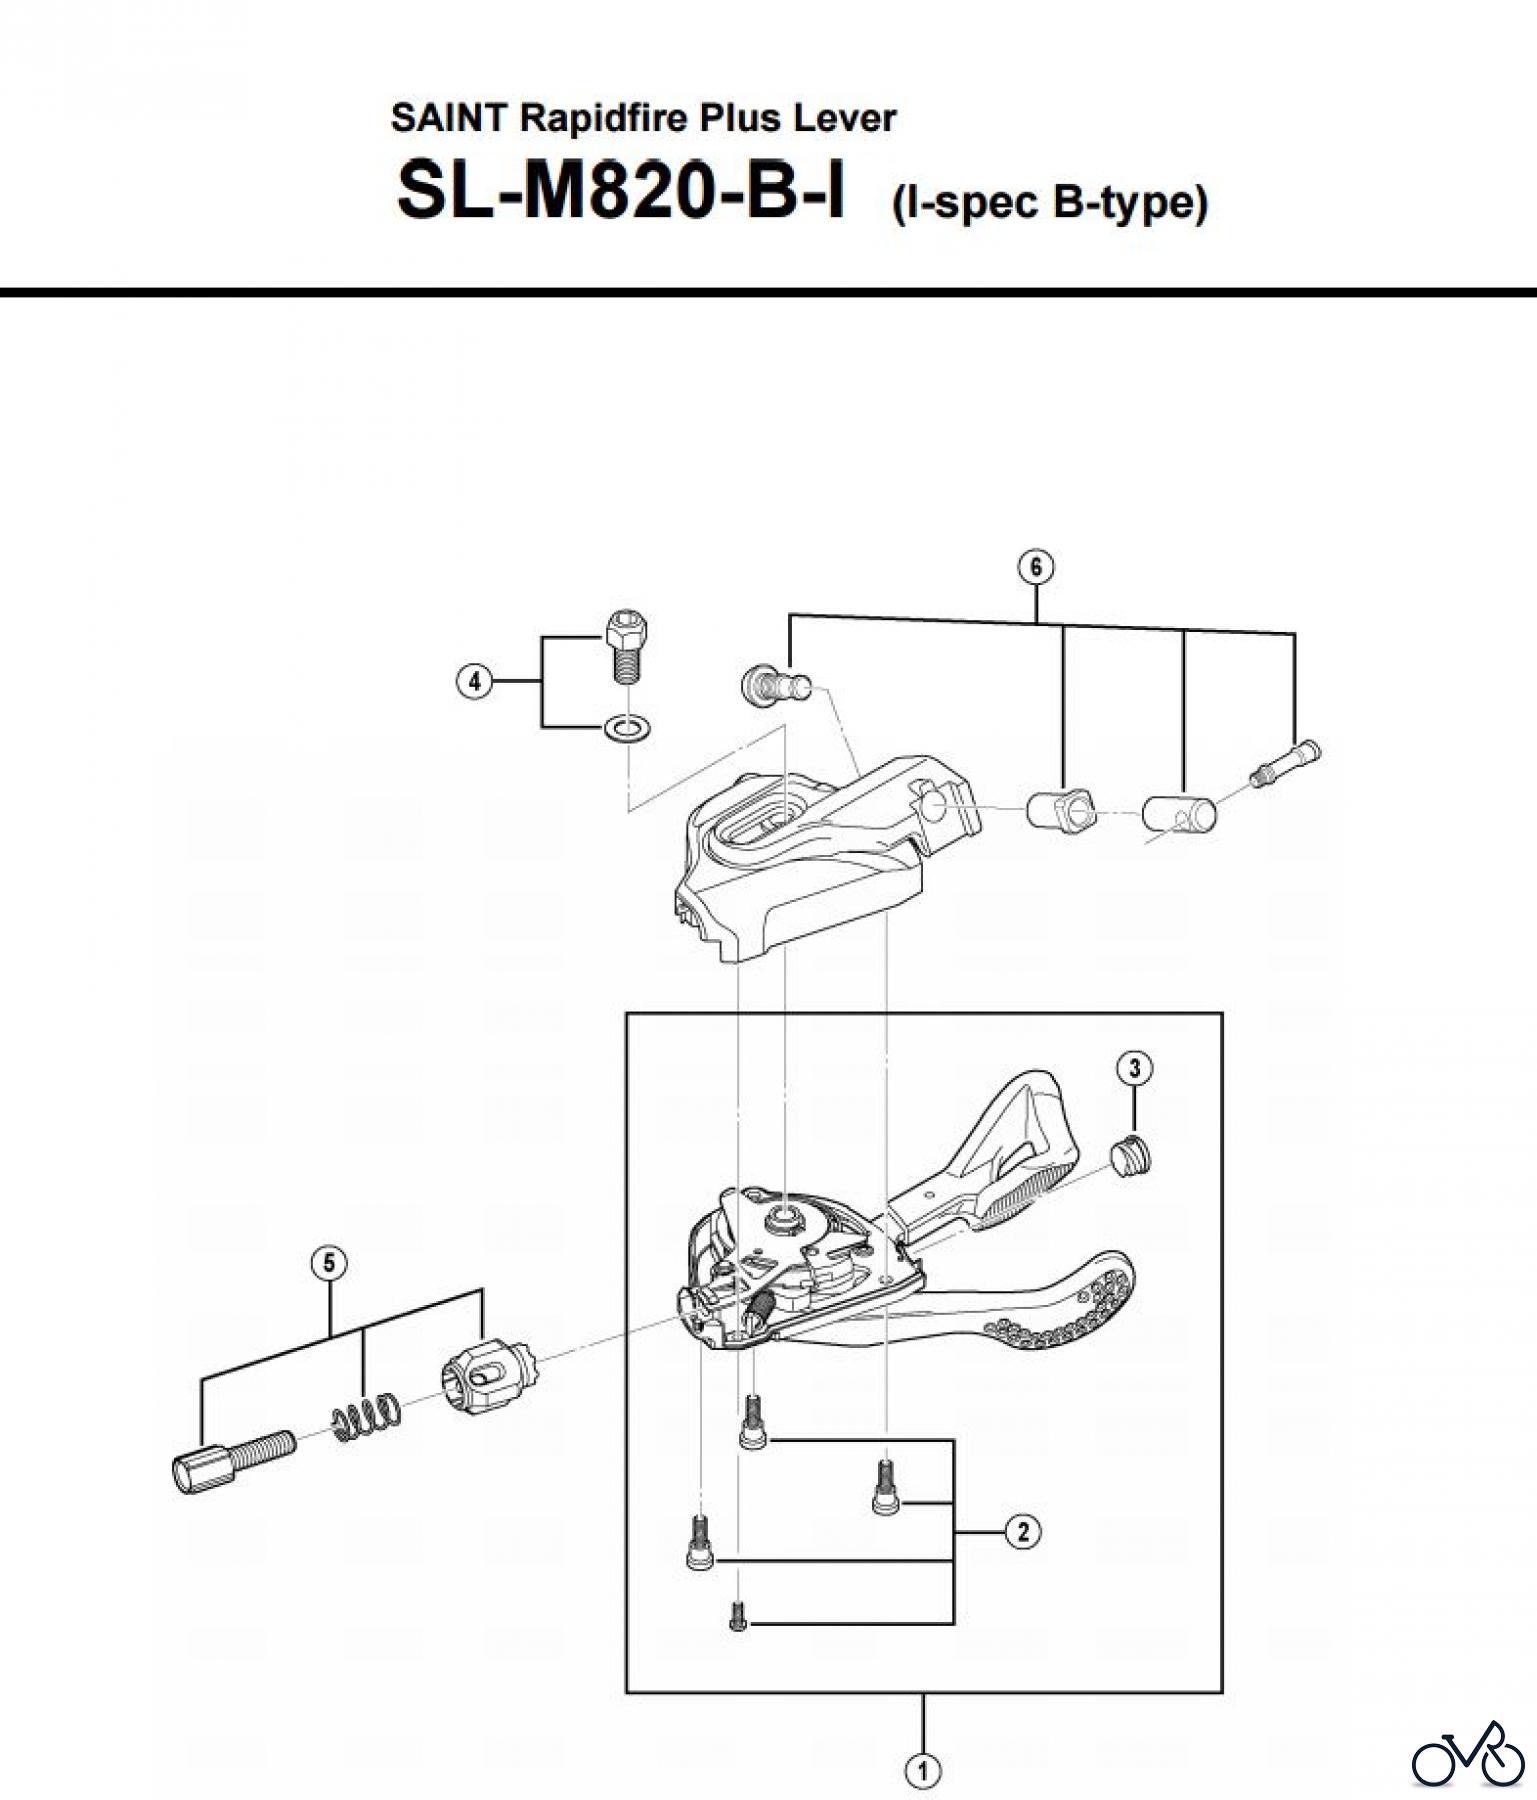  Shimano SL Shift Lever - Schalthebel SL-M820-B-I (I-spec B-type) SAINT Rapidfire Plus Lever